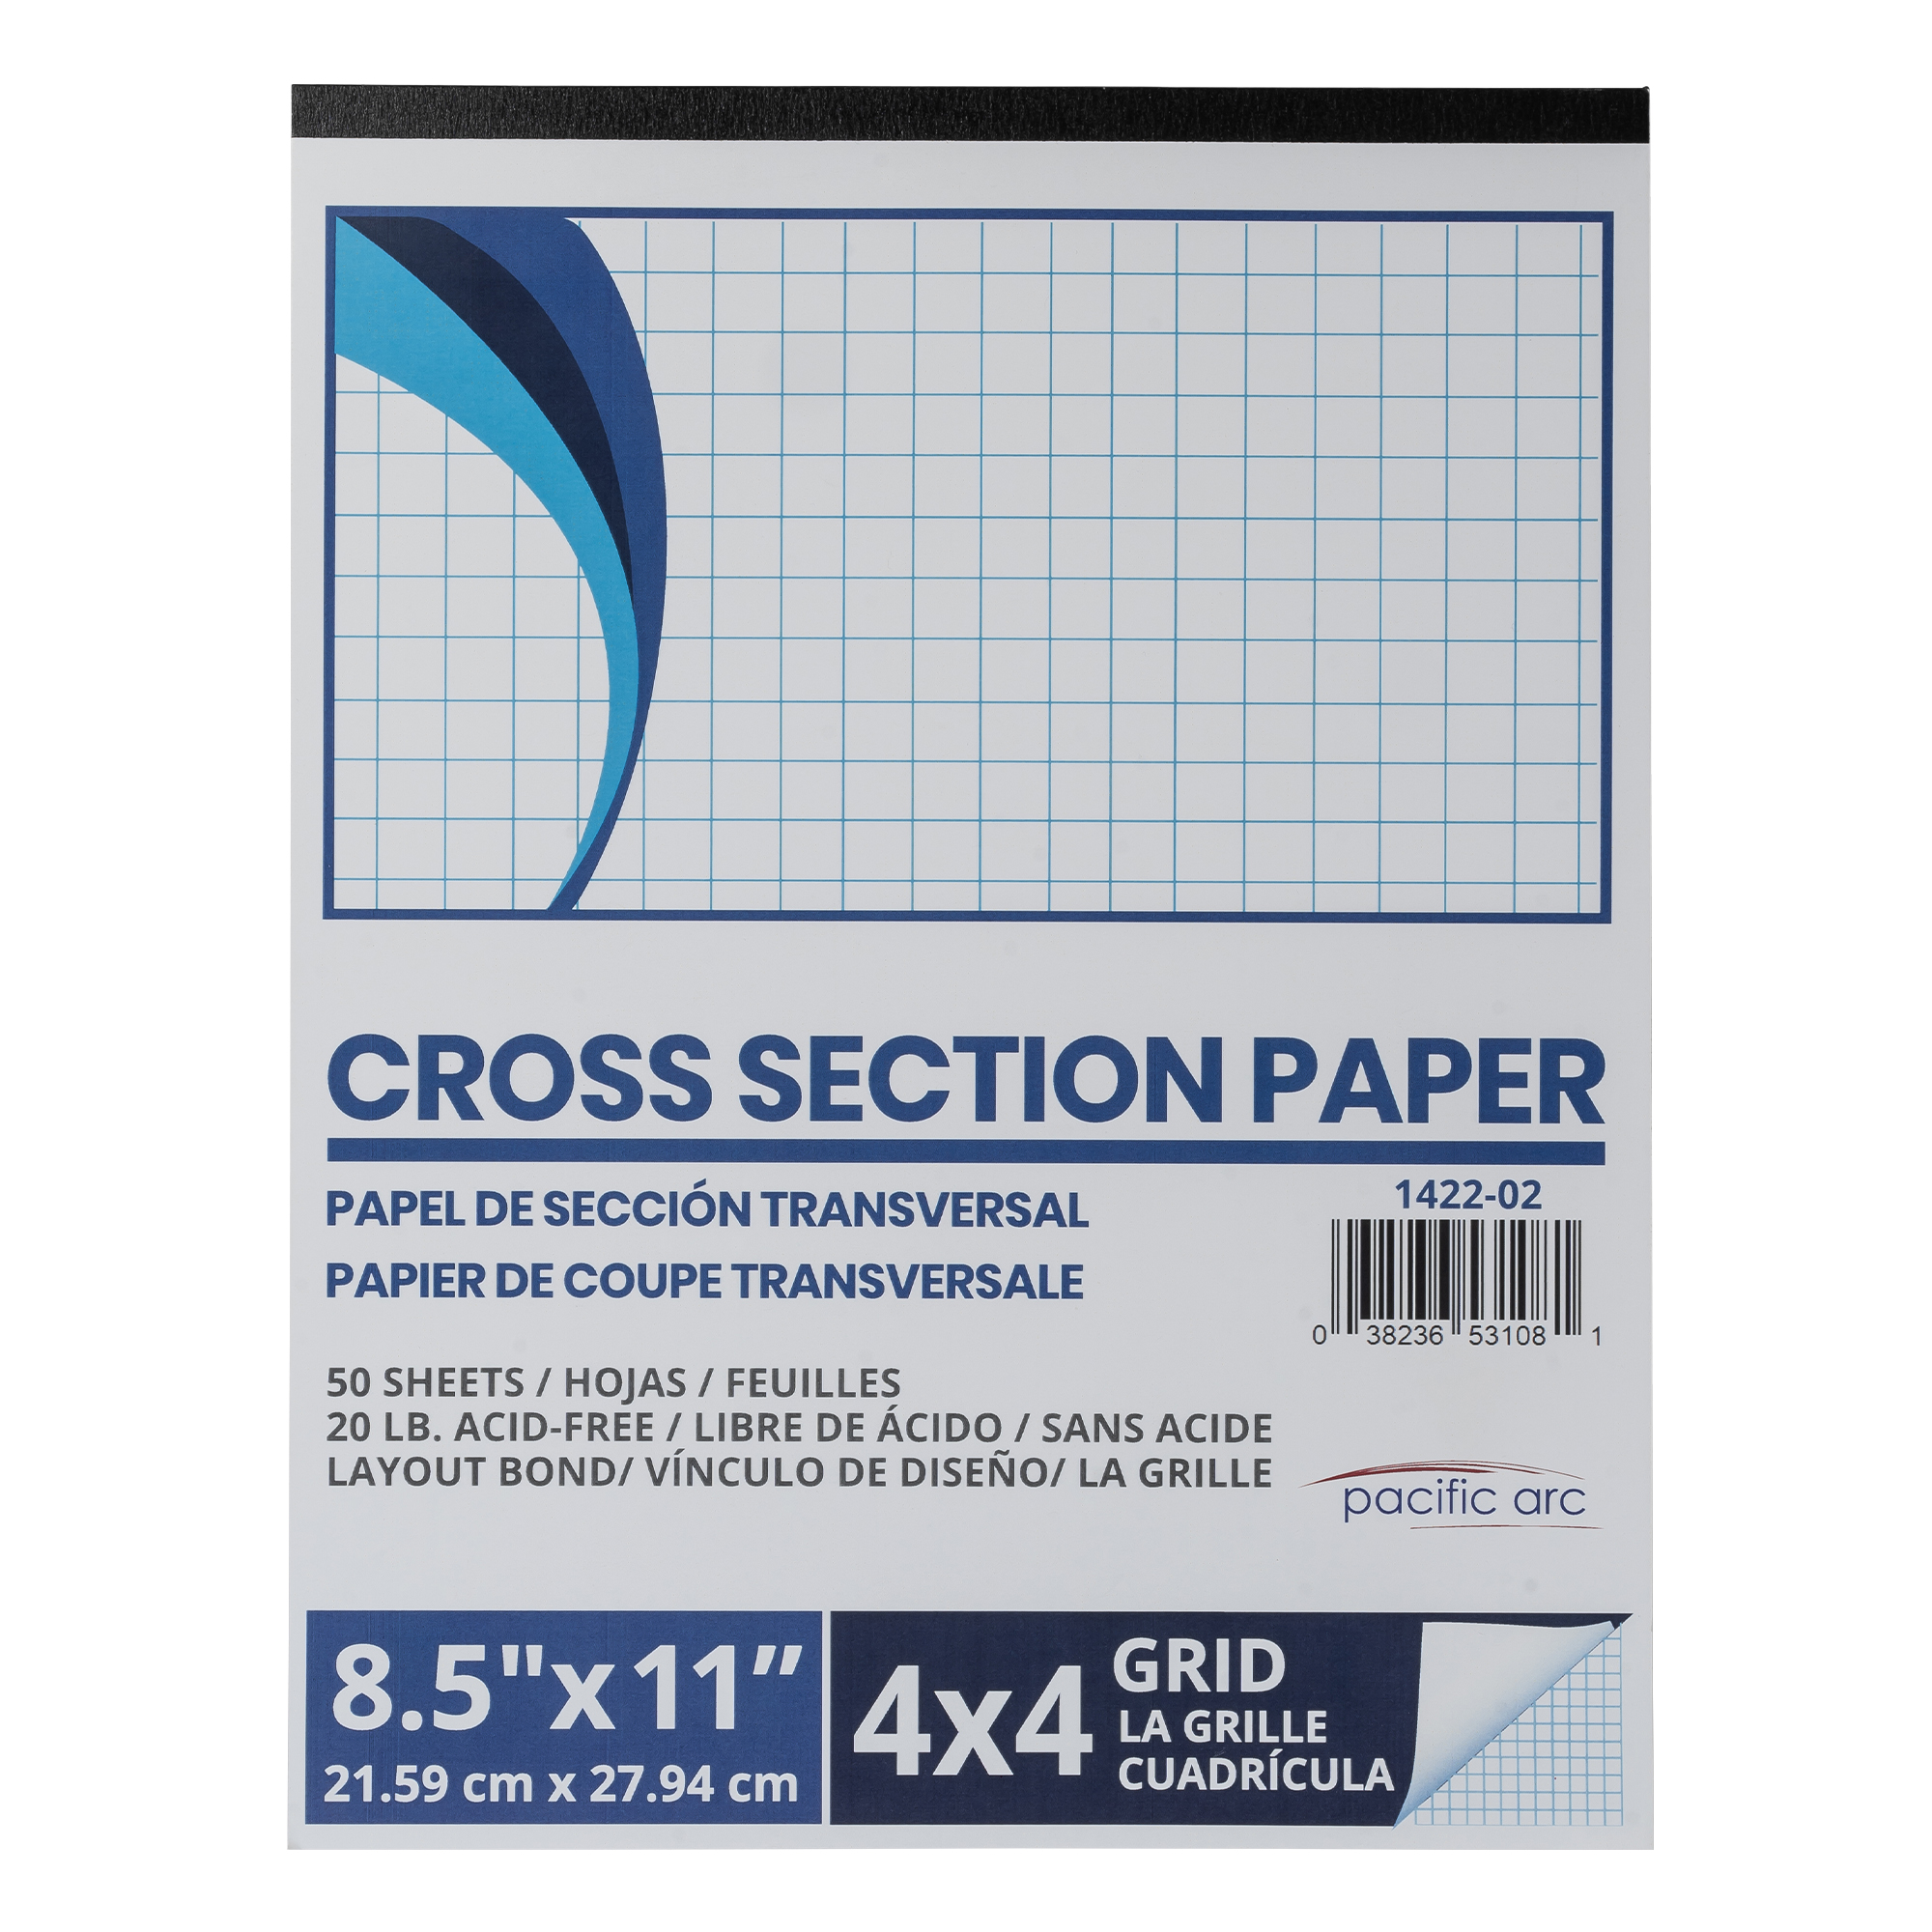 4x4 Cross Section Layout Bond - 1422-02